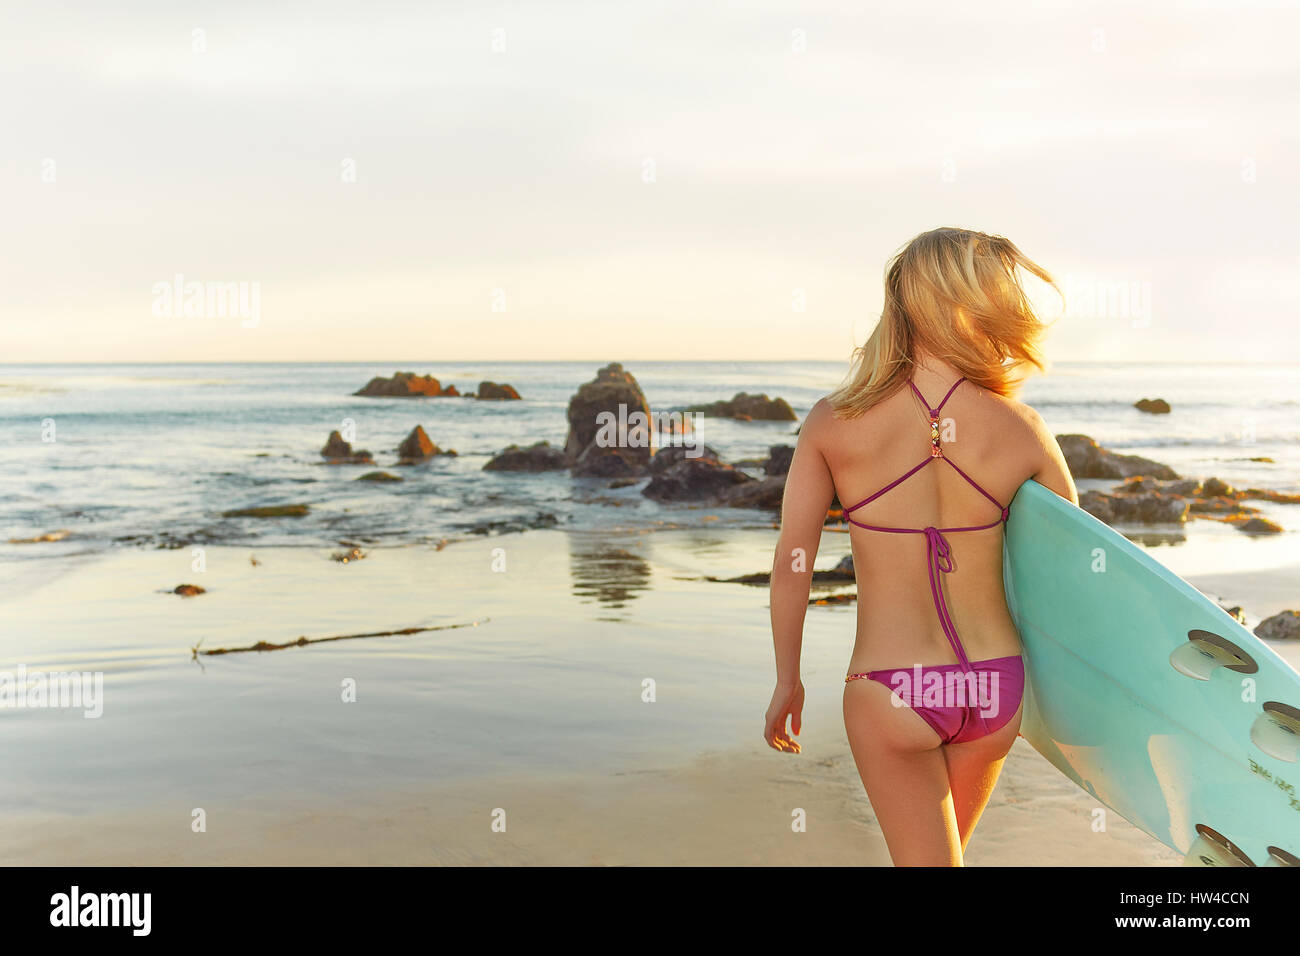 Caucasian woman carrying surfboard on beach Stock Photo